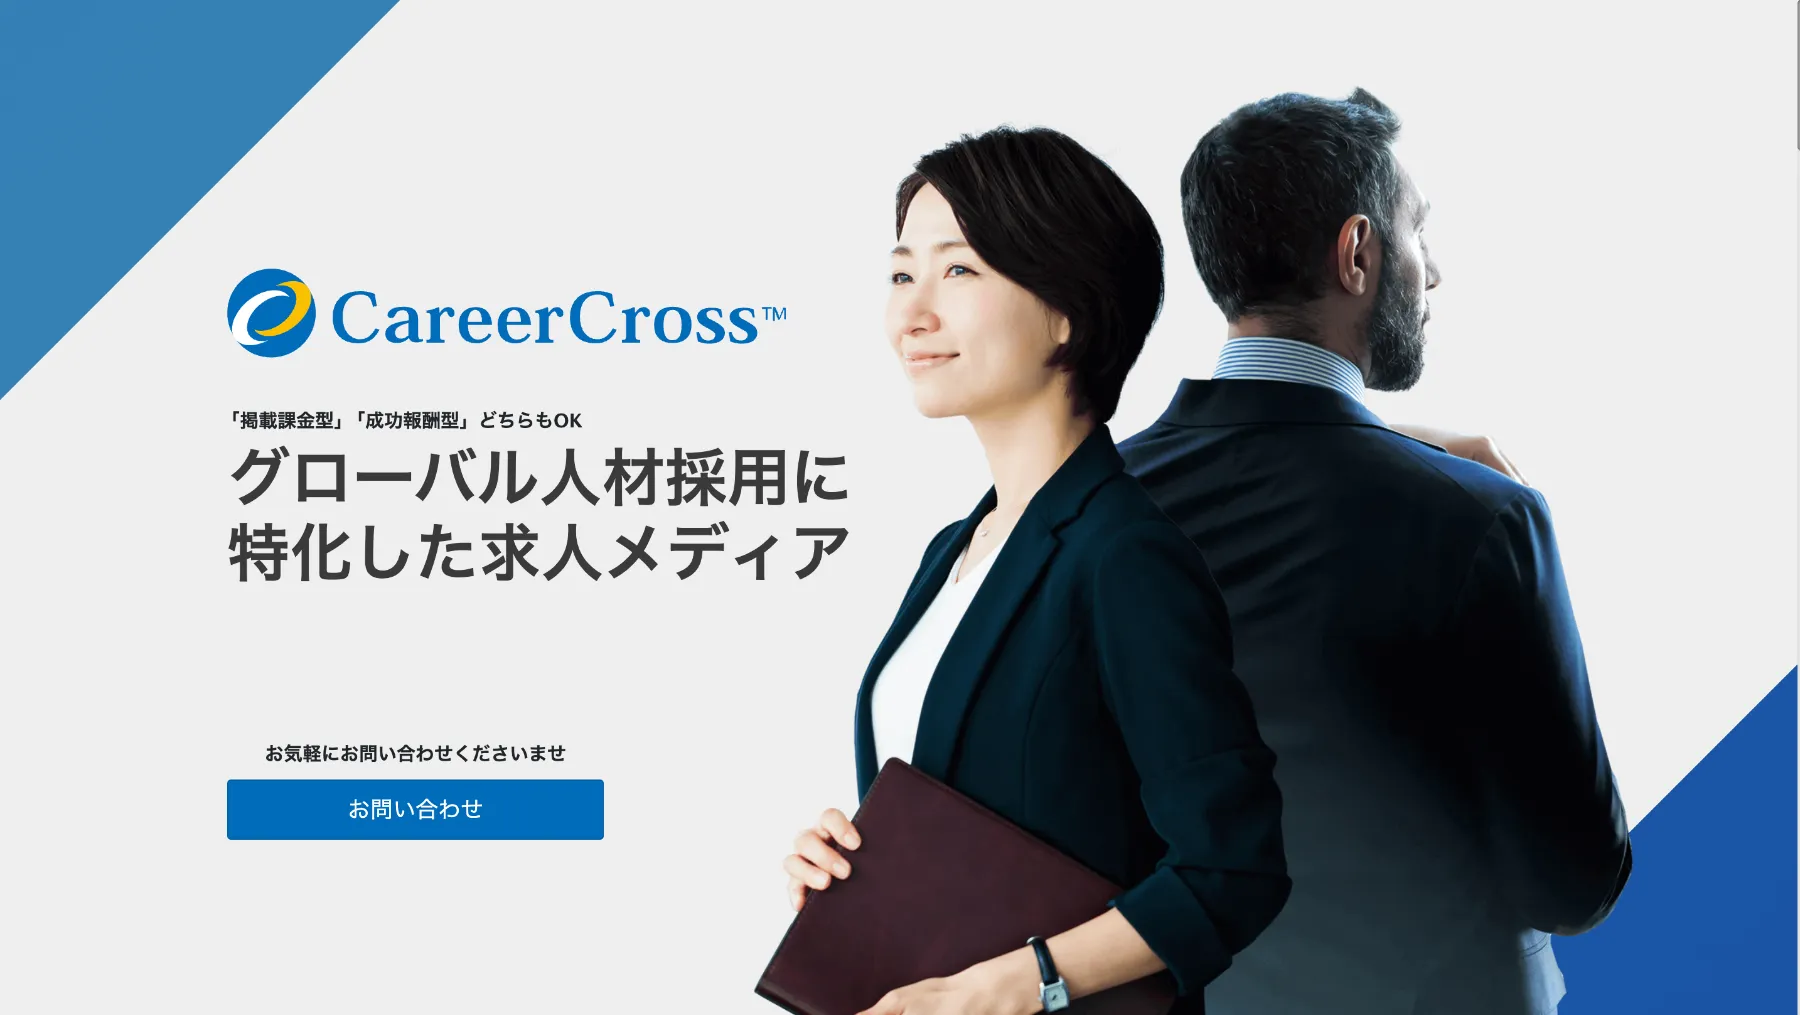 CareerCross公式サイト